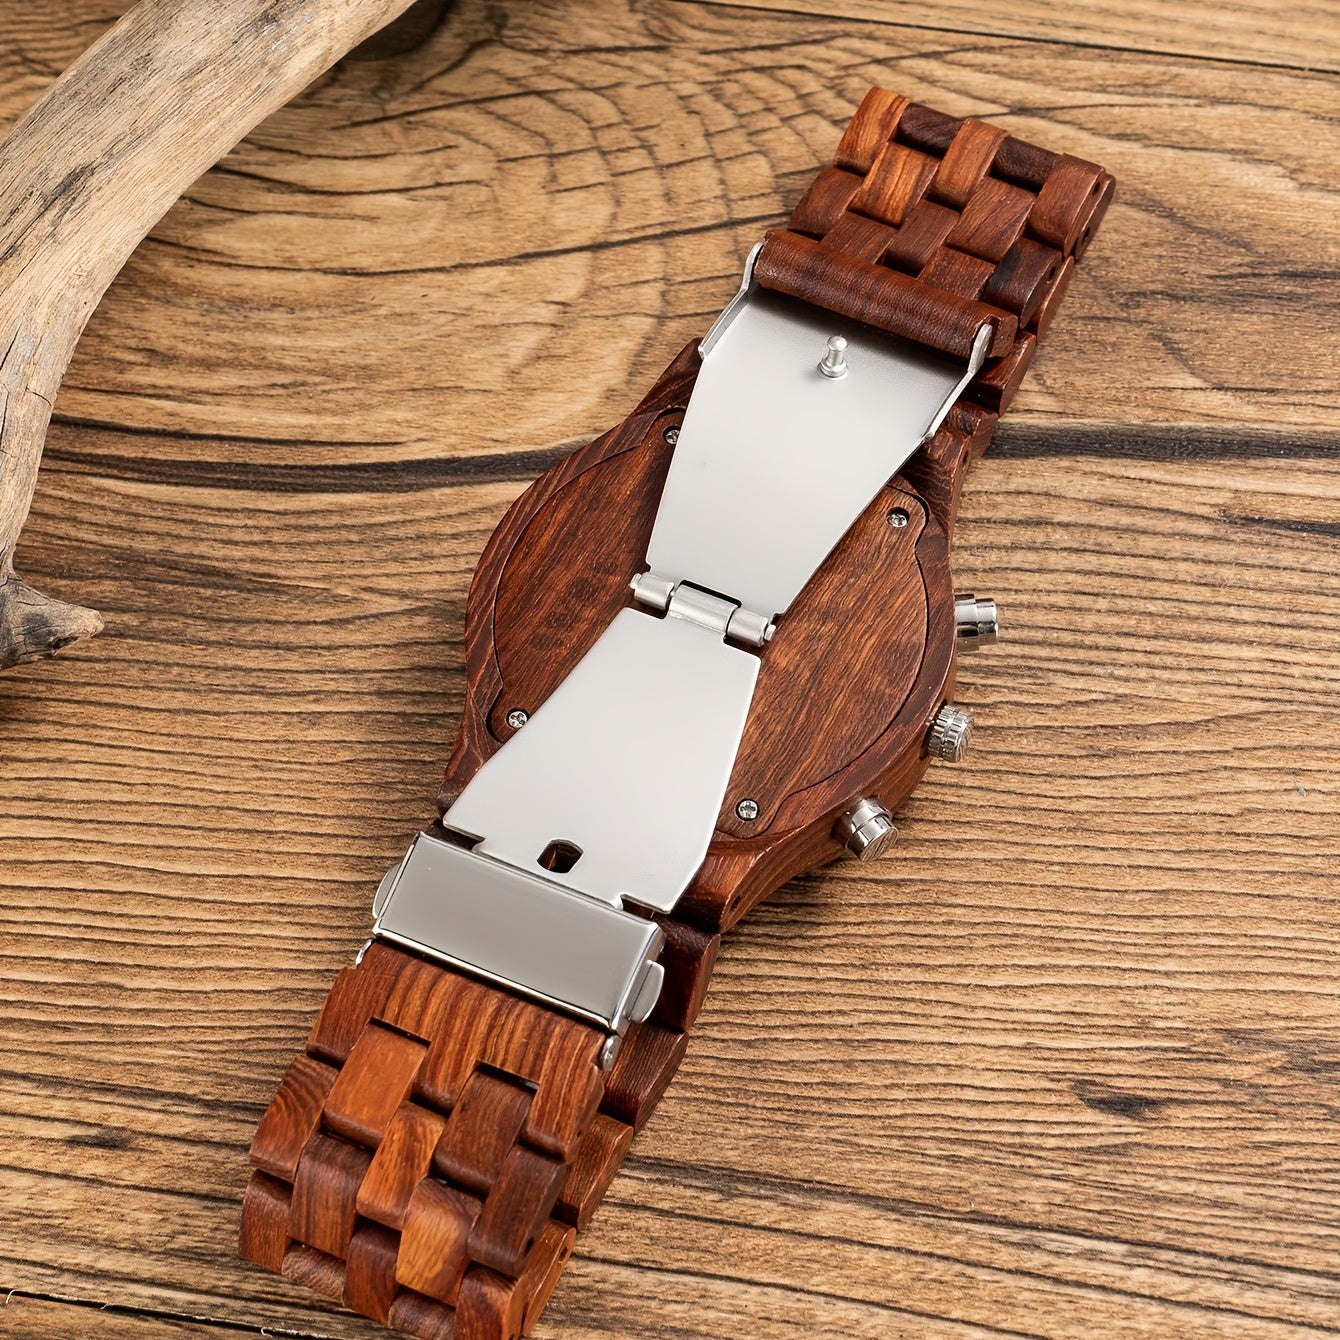 Multifunctional Quartz Wooden Watch